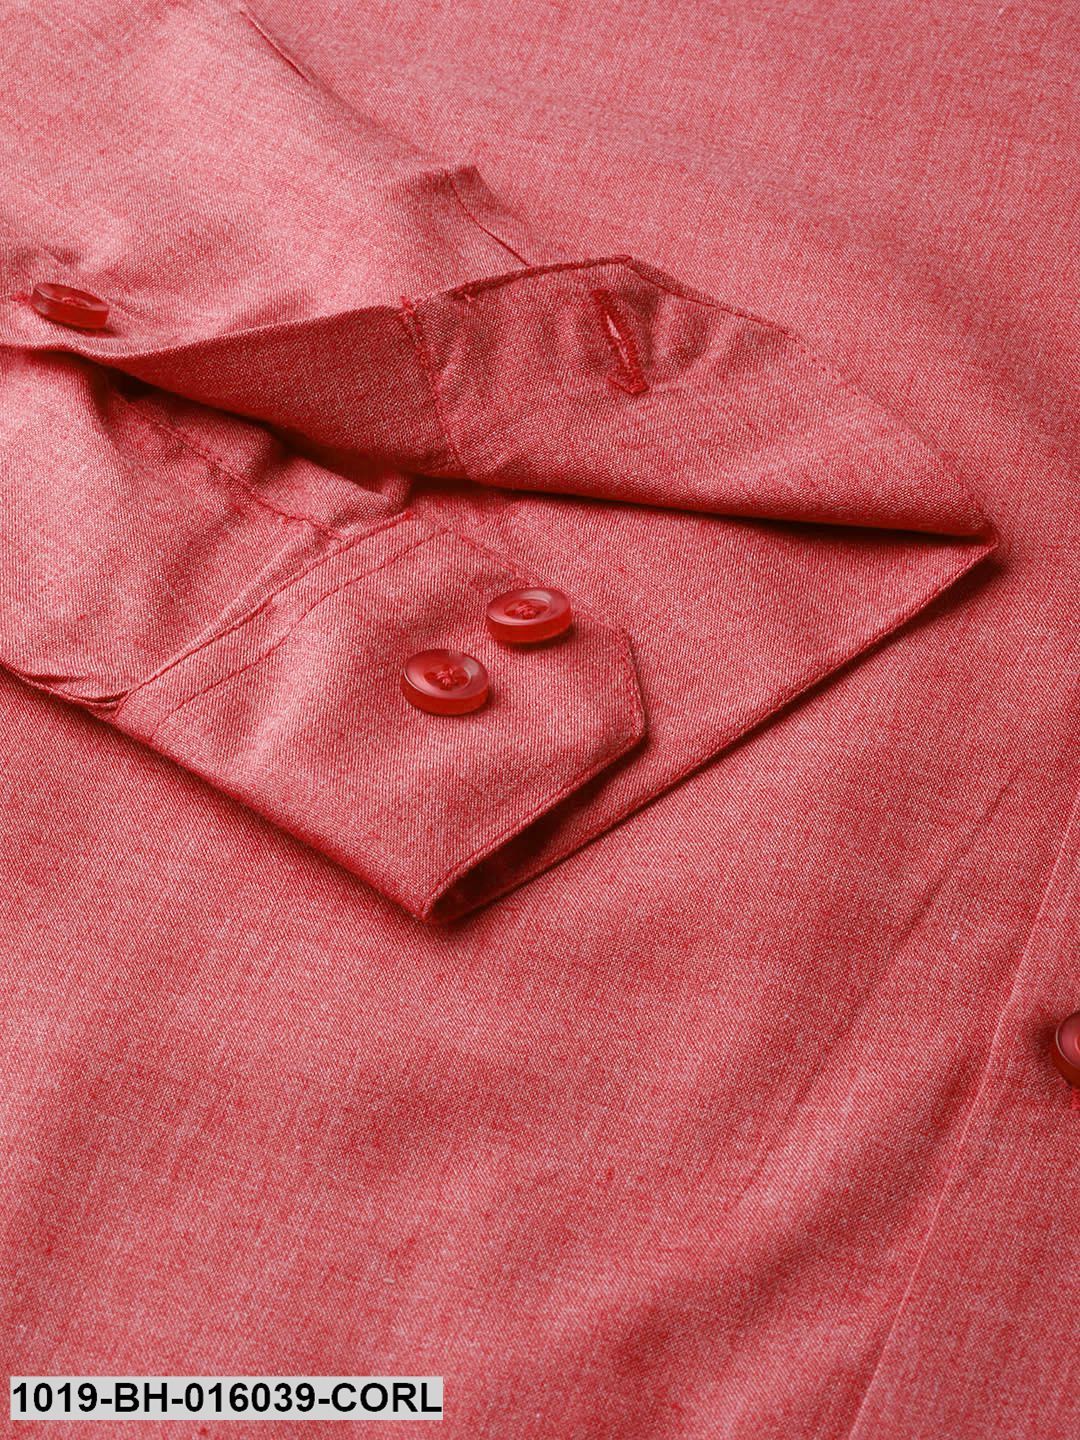 Men's Cotton Coral Red Casual Shirt - Sojanya